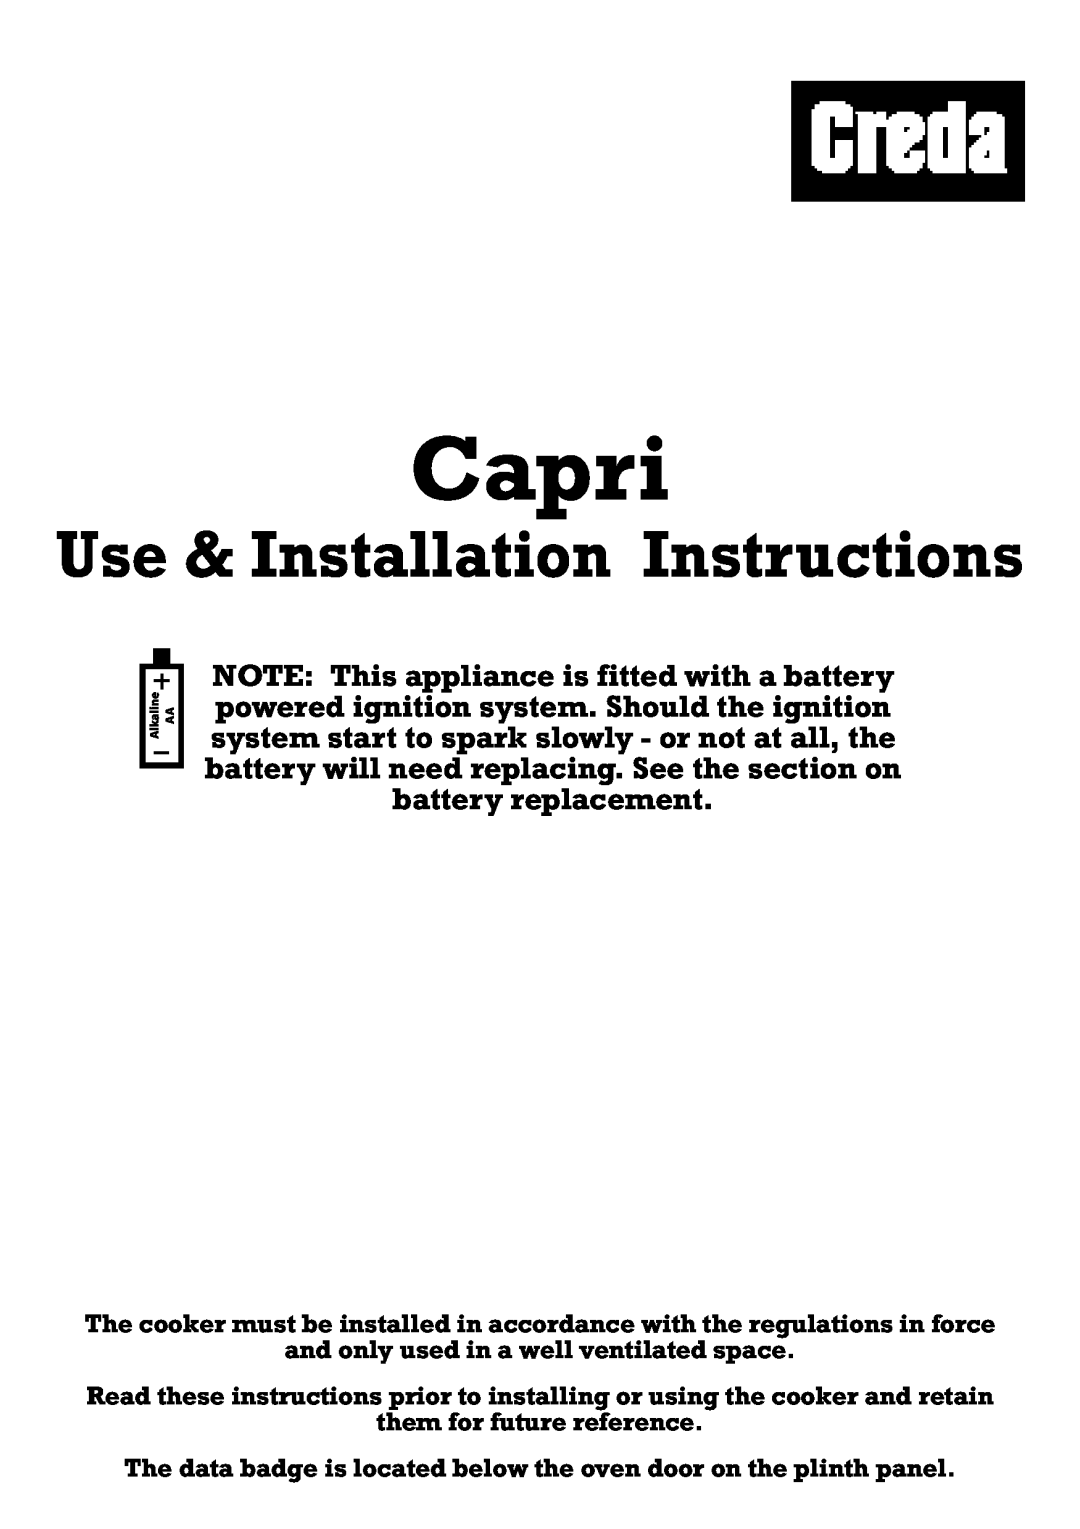 Creda 41202 installation instructions Capri, Use & Installation Instructions 